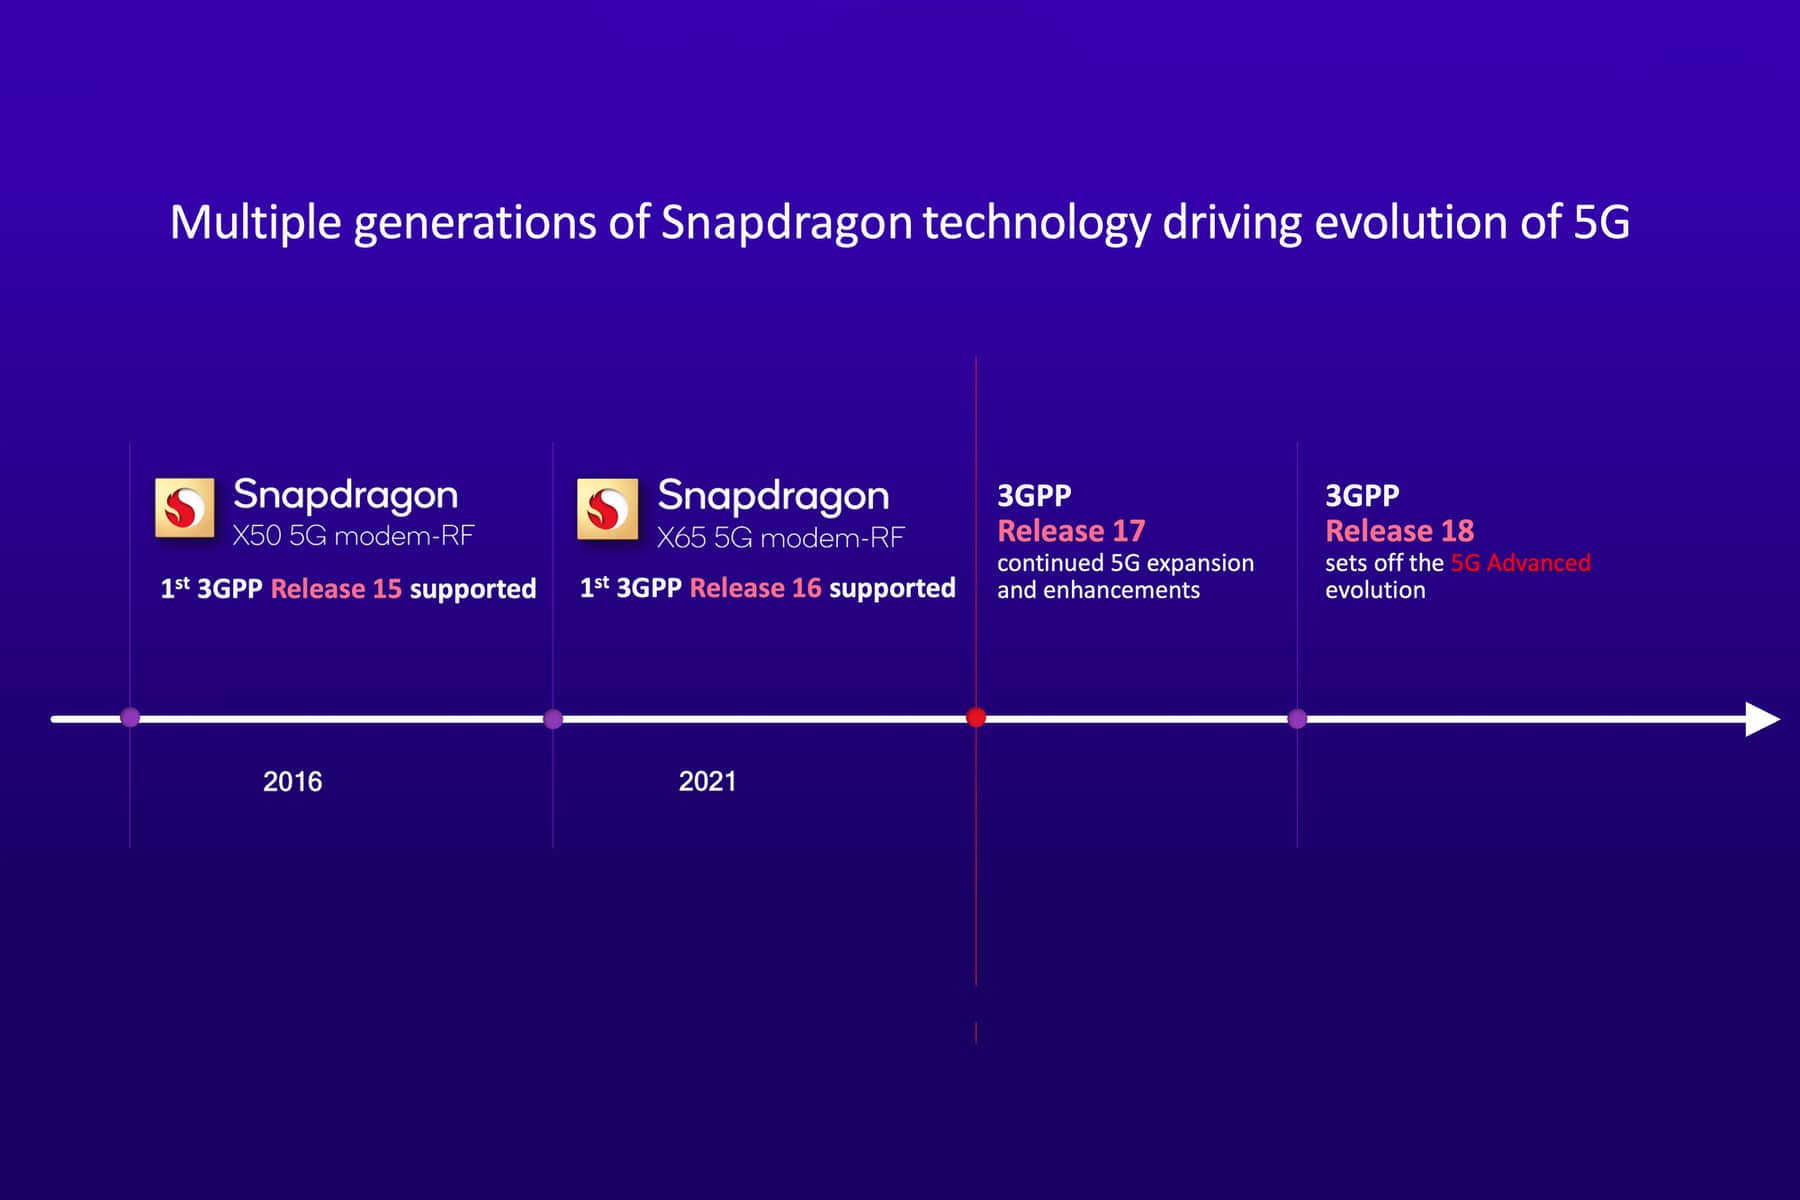 Snapdragon X75 modem, world's first 5G advanced-ready RF-system